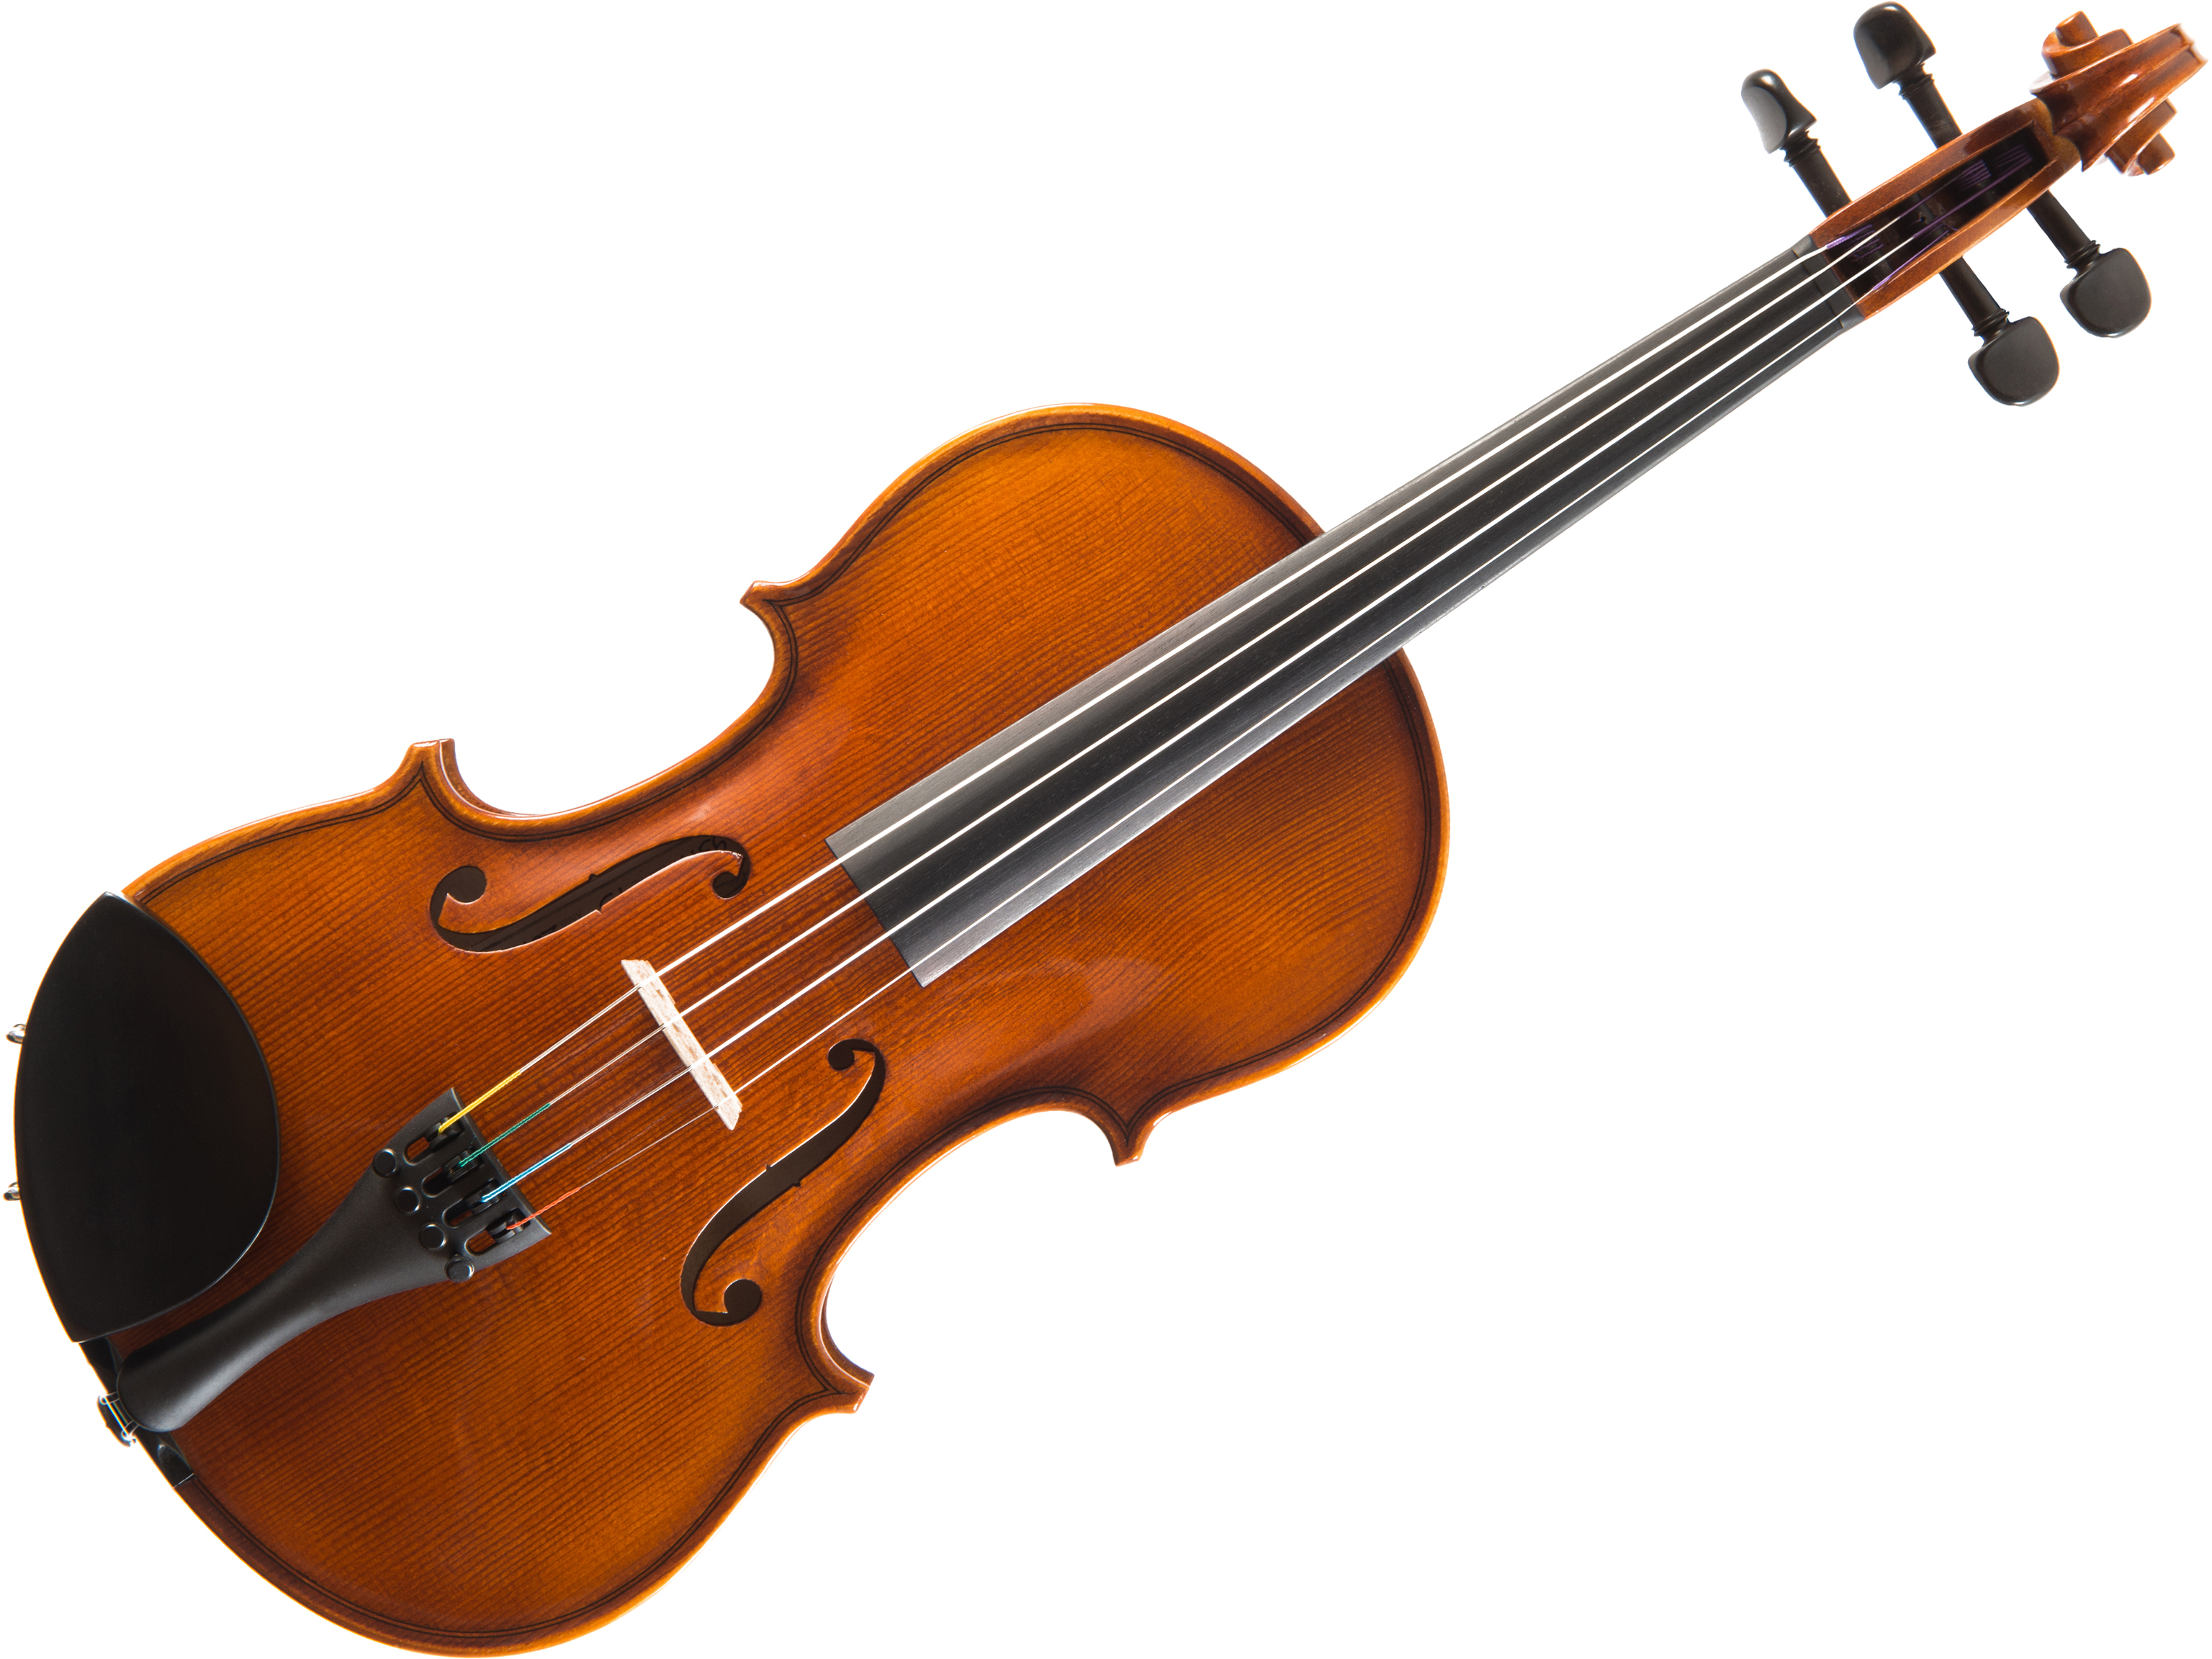 C.A.Götz 98MT Violine 3/4 Menuett Heritage